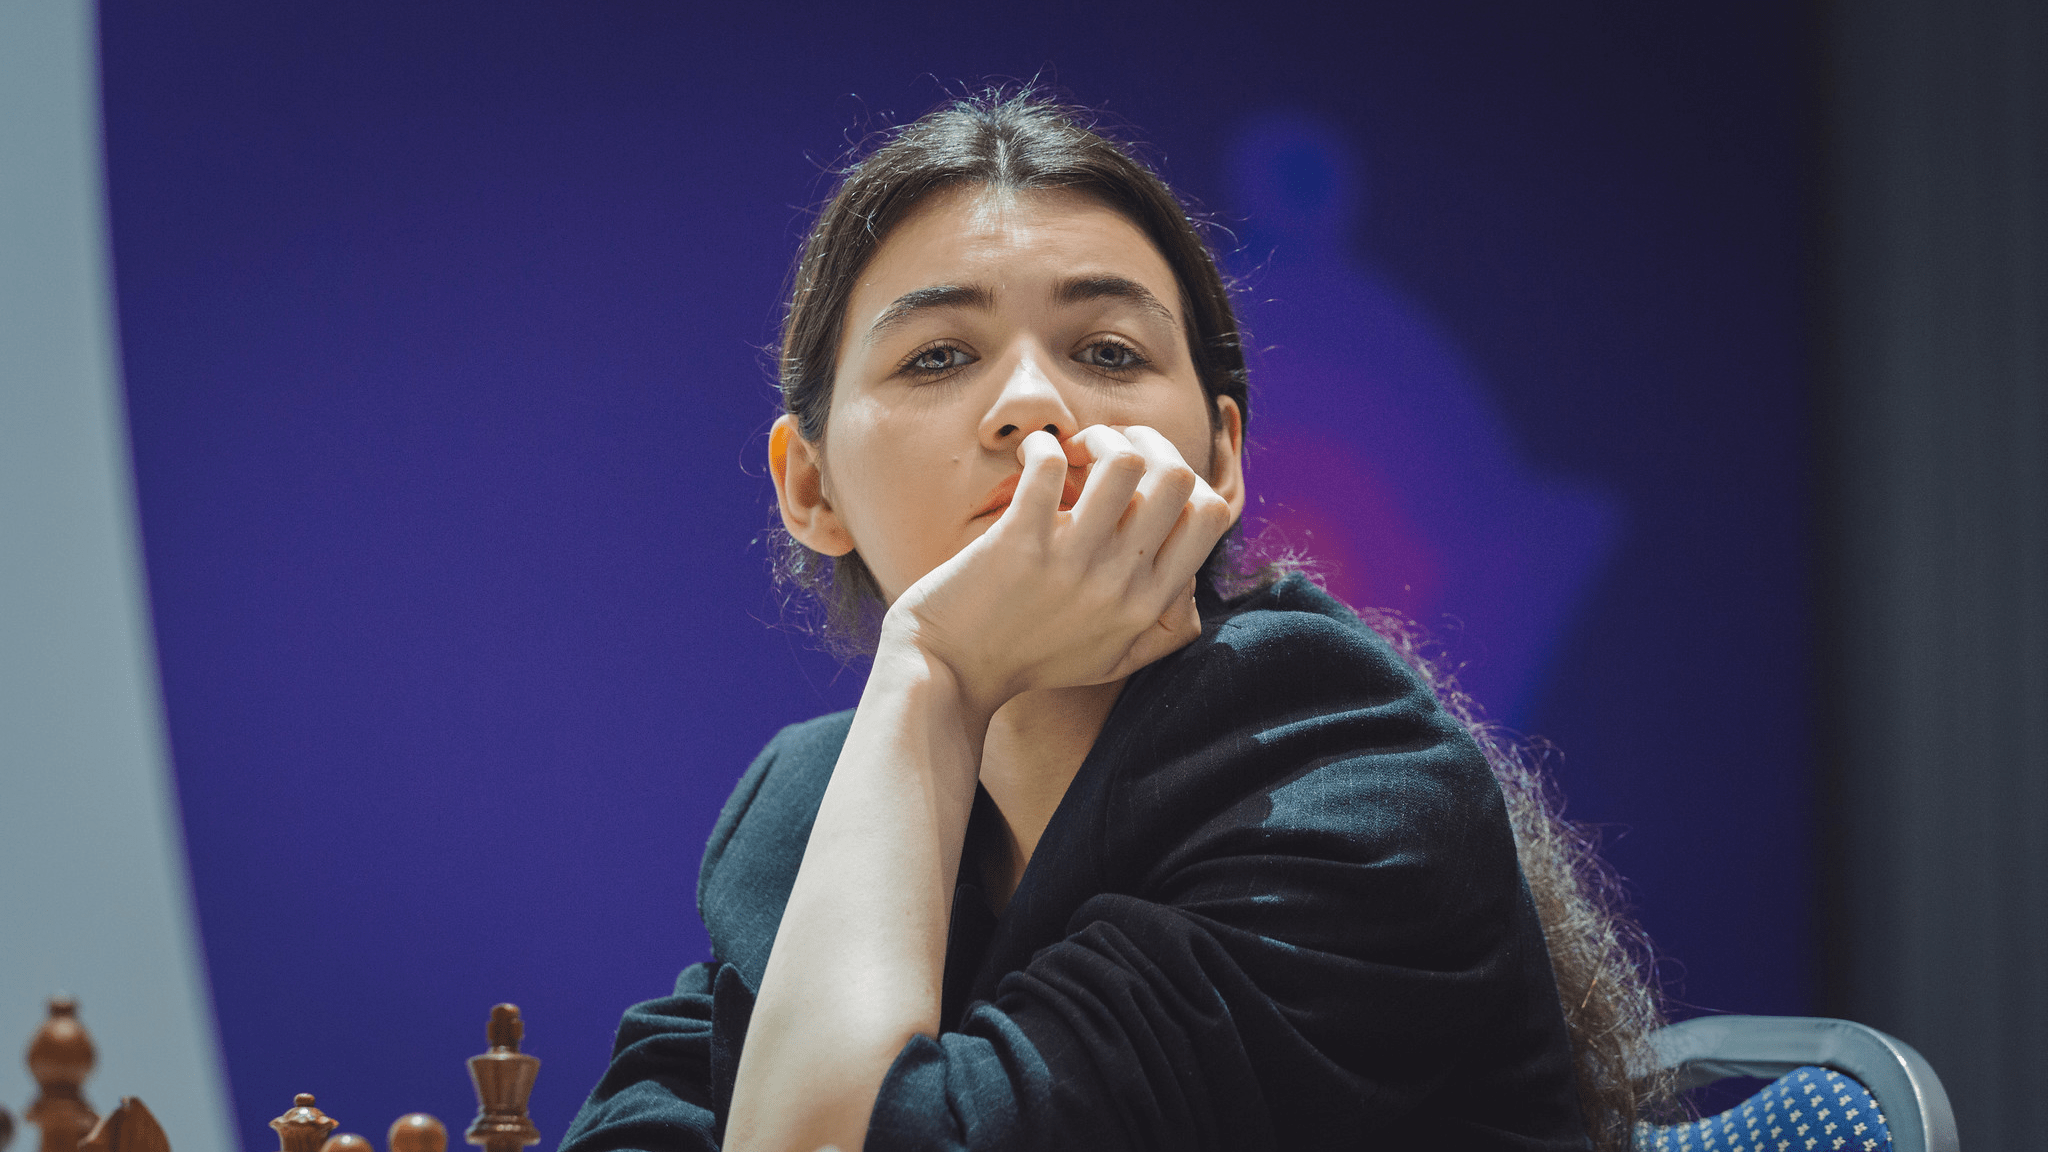 World Chess - Dina Belenkaya: It's hard when the